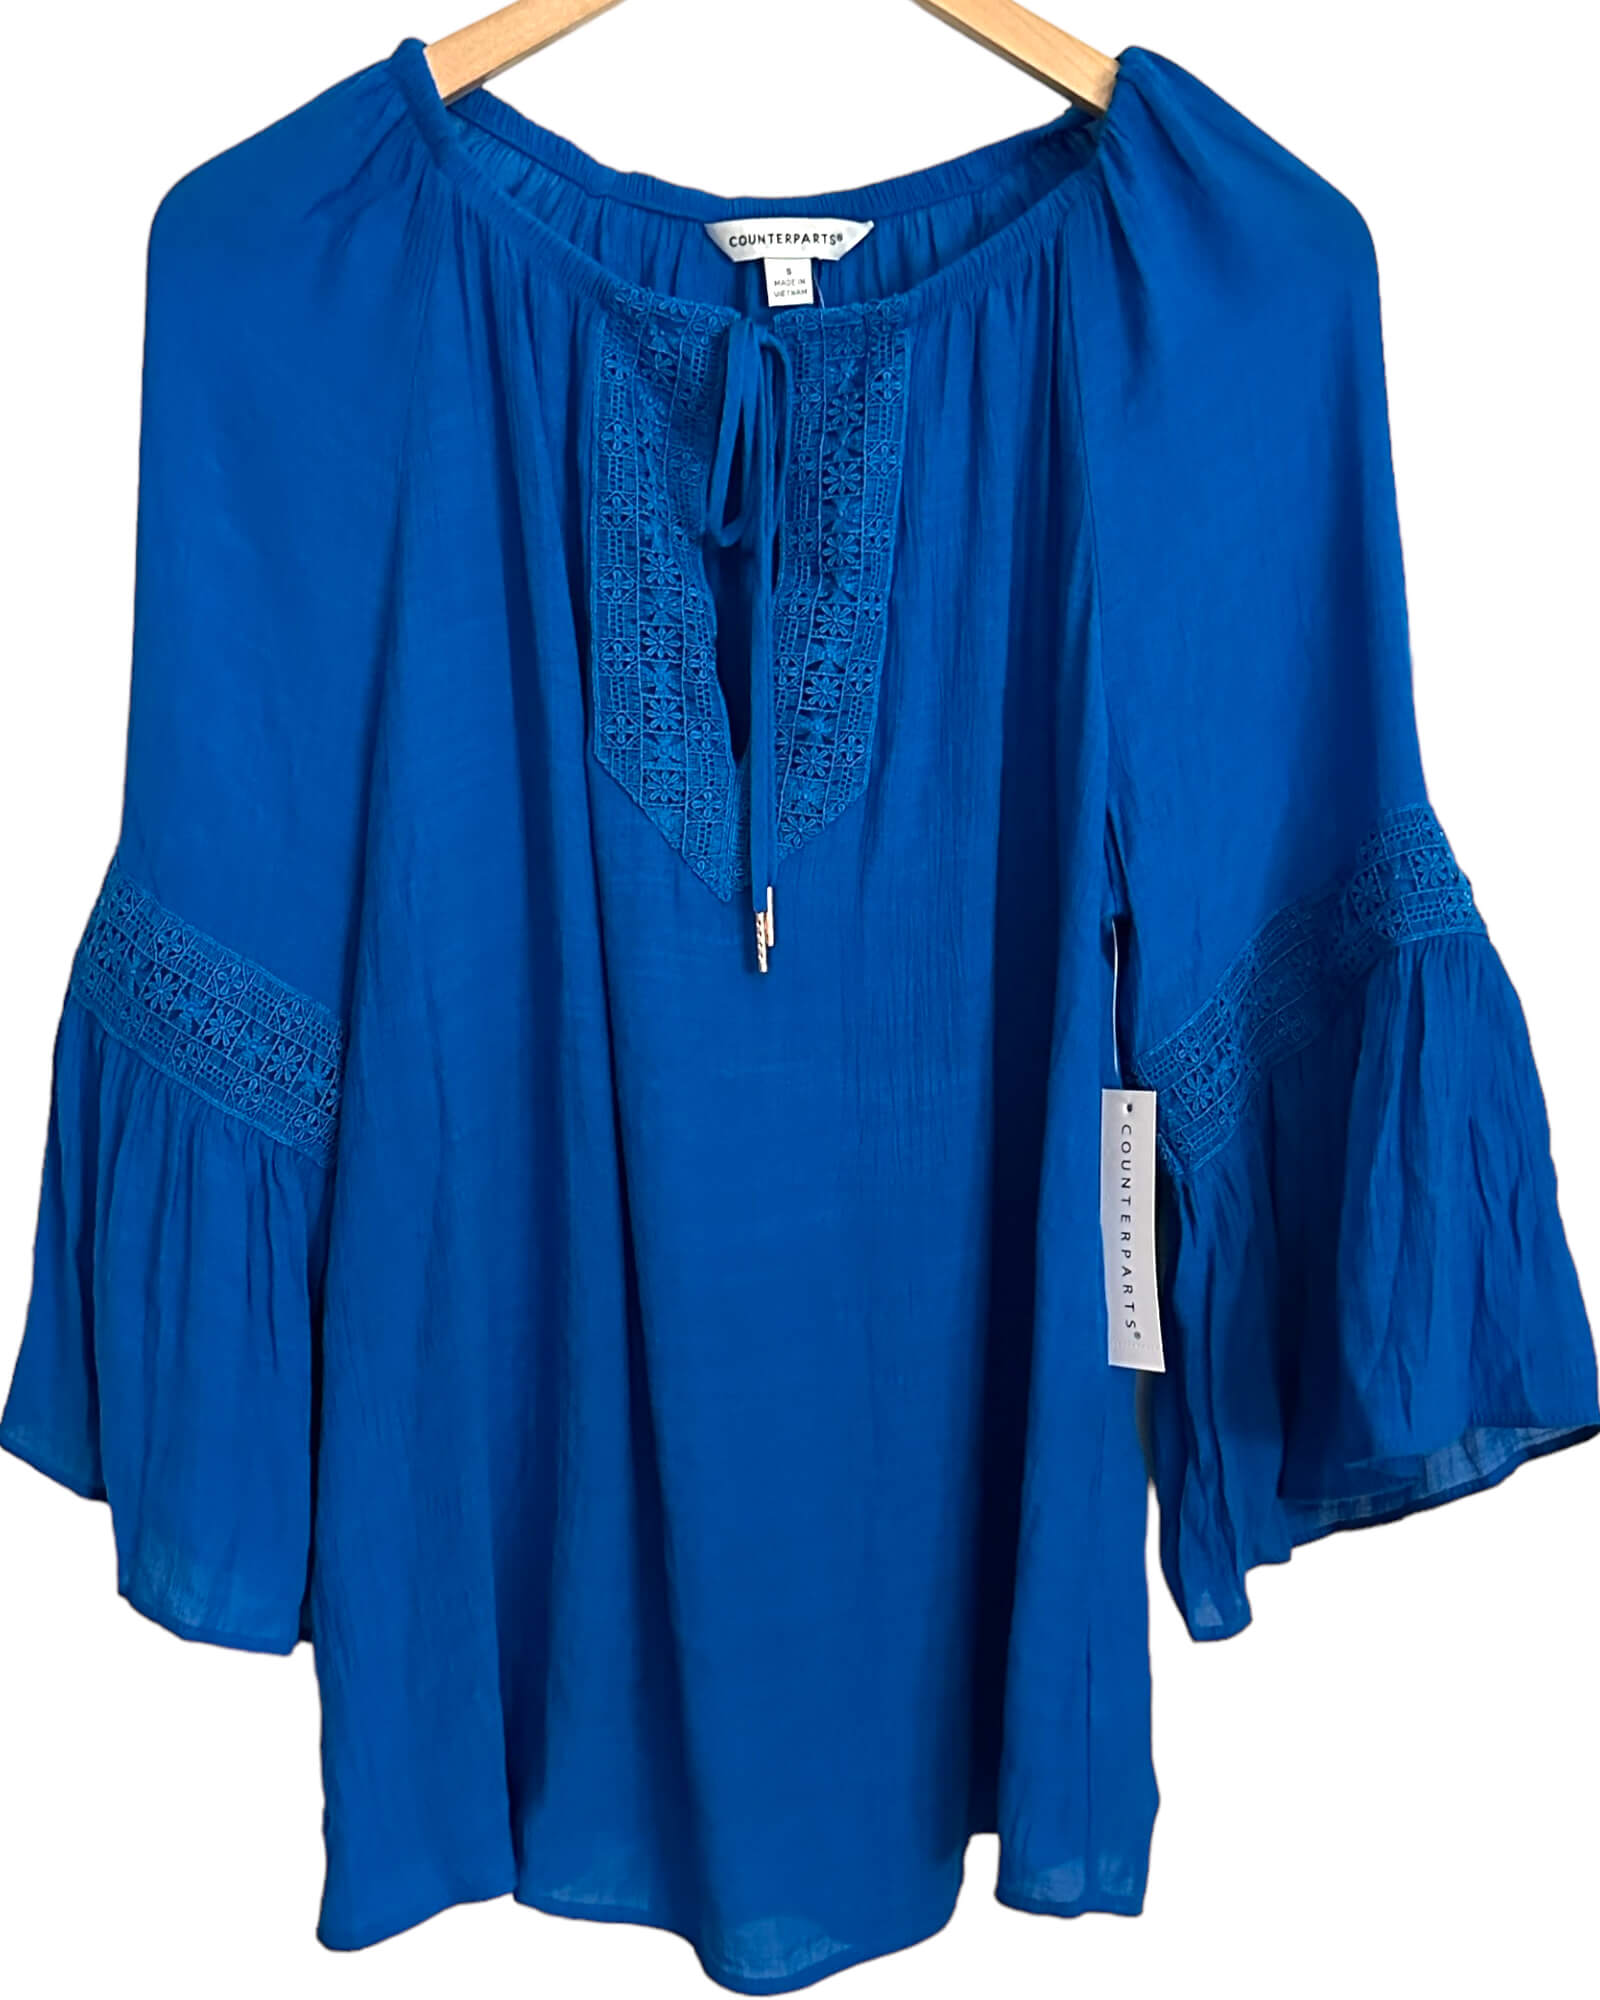 Light Summer COVINGTON blue cove bell sleeve blouse